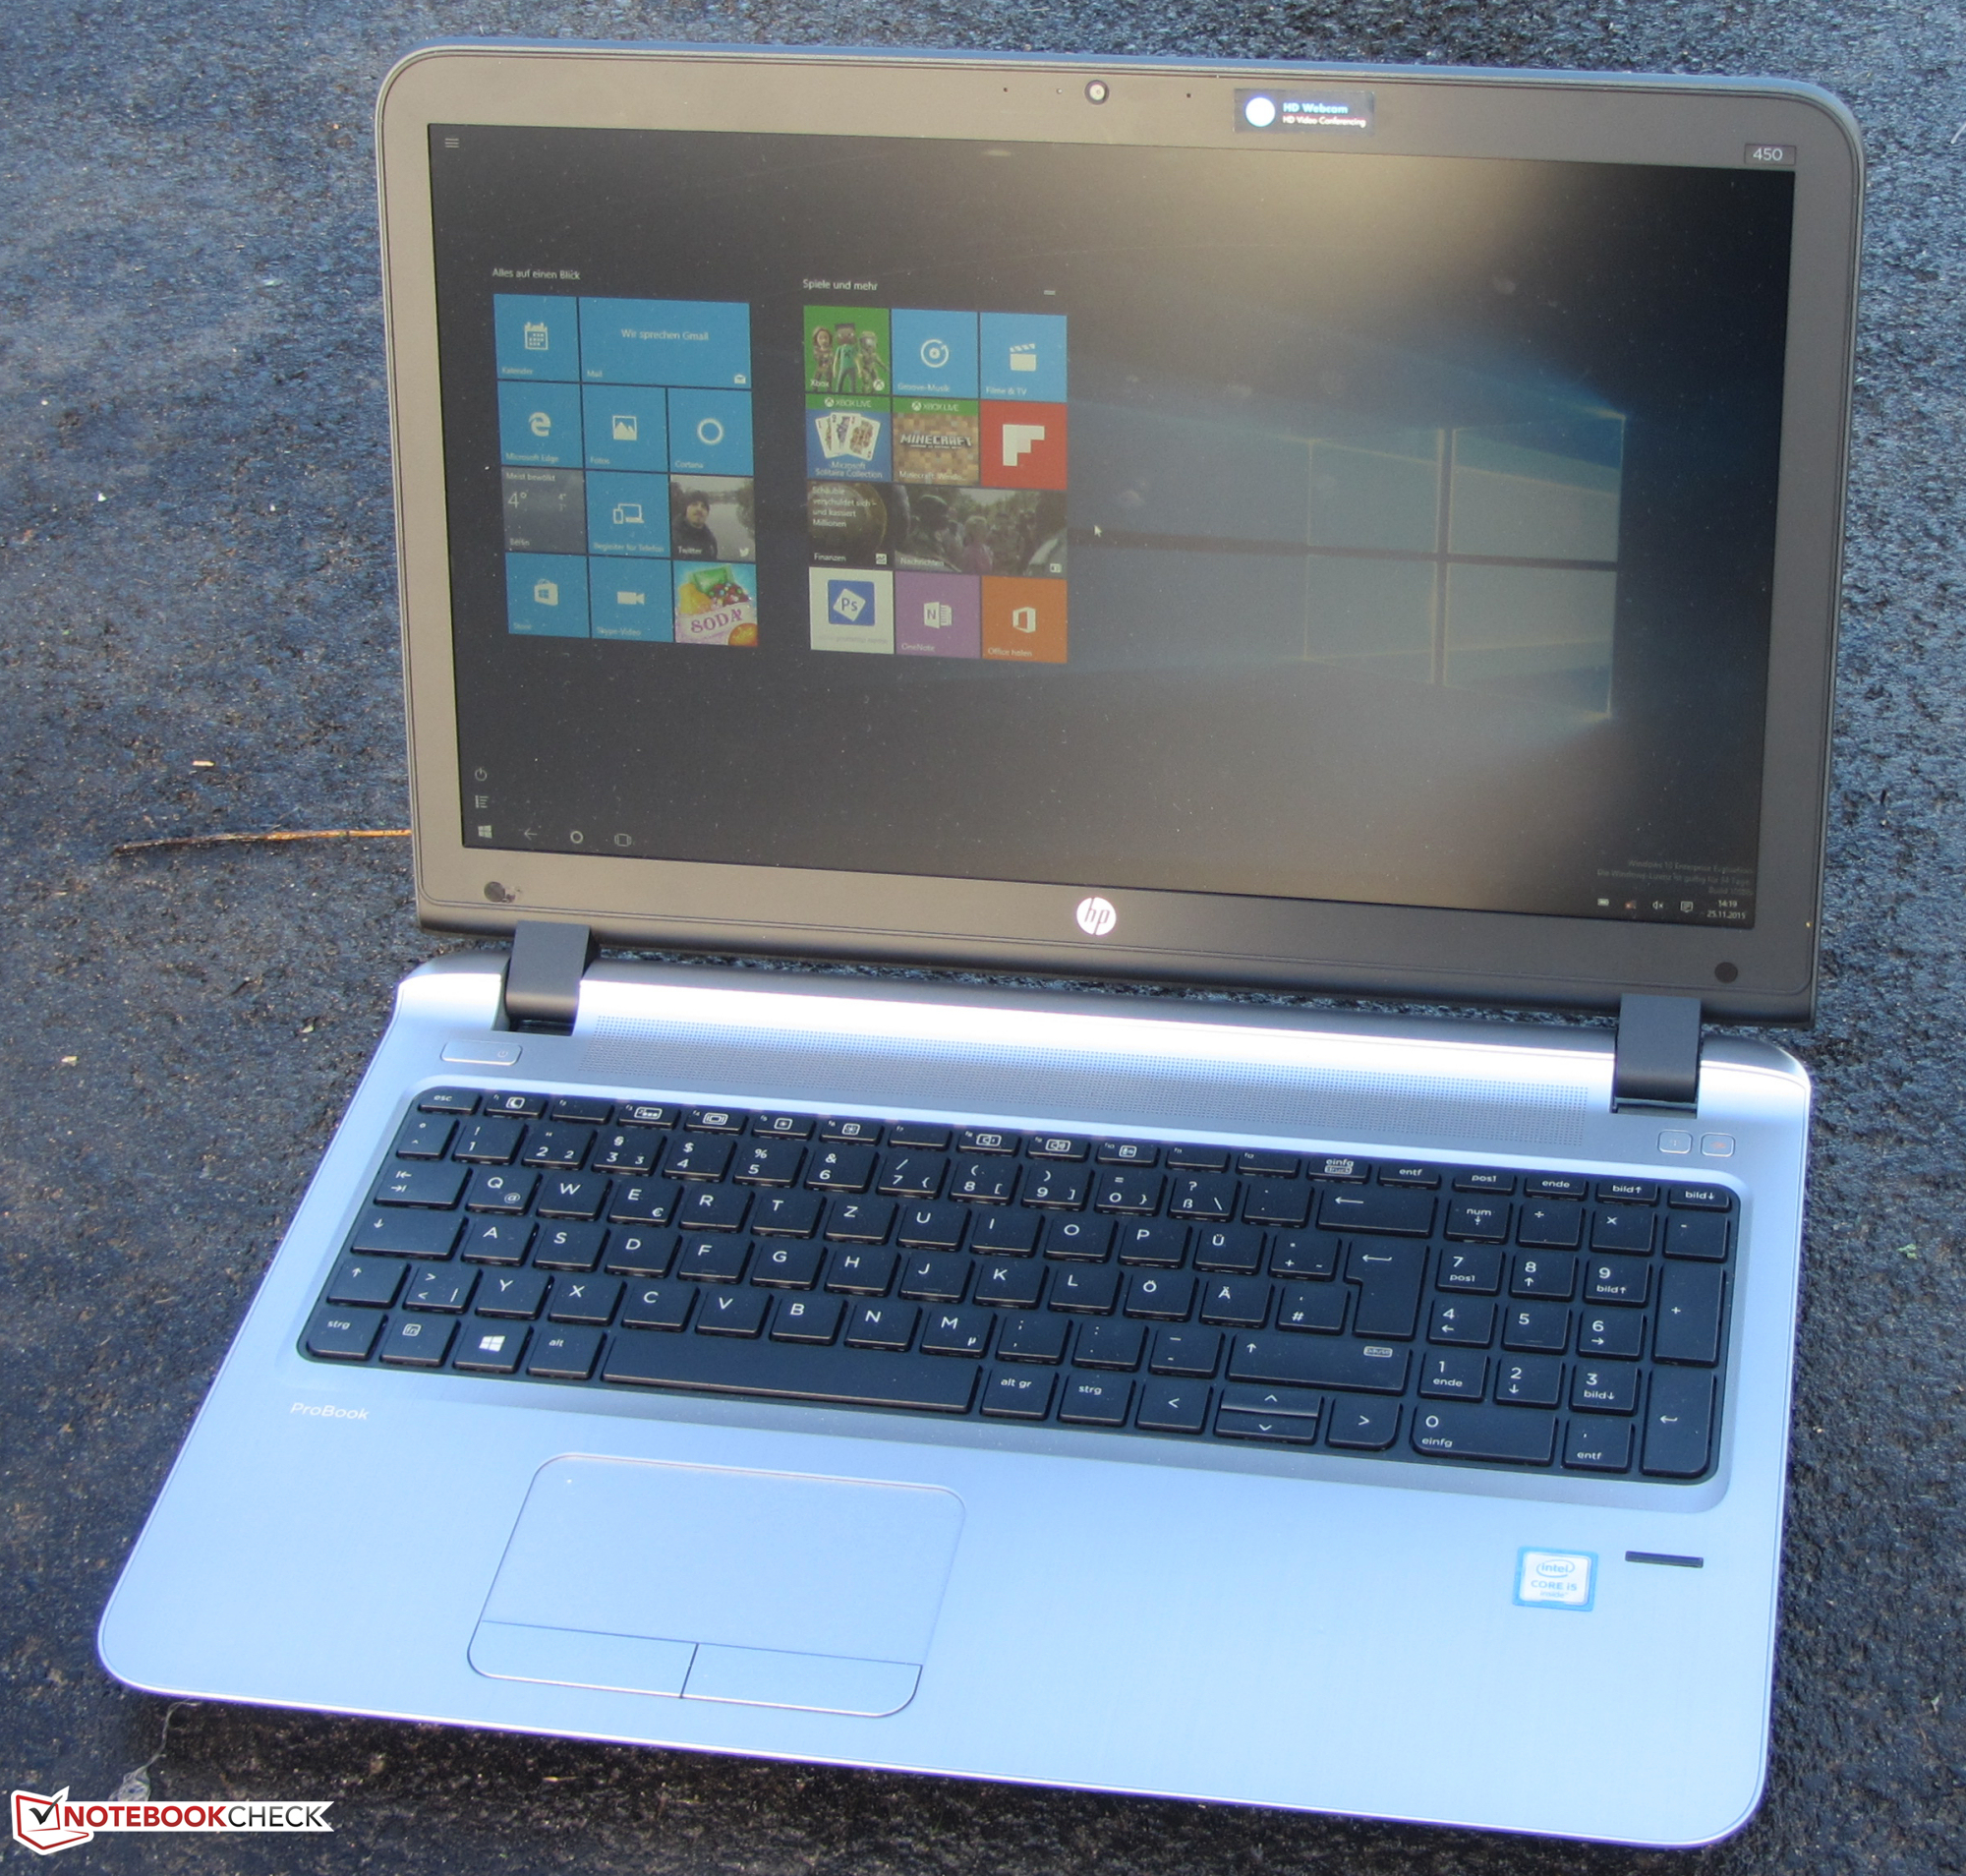 Specialiseren fragment Democratie HP ProBook 450 G3 Notebook Review - NotebookCheck.net Reviews